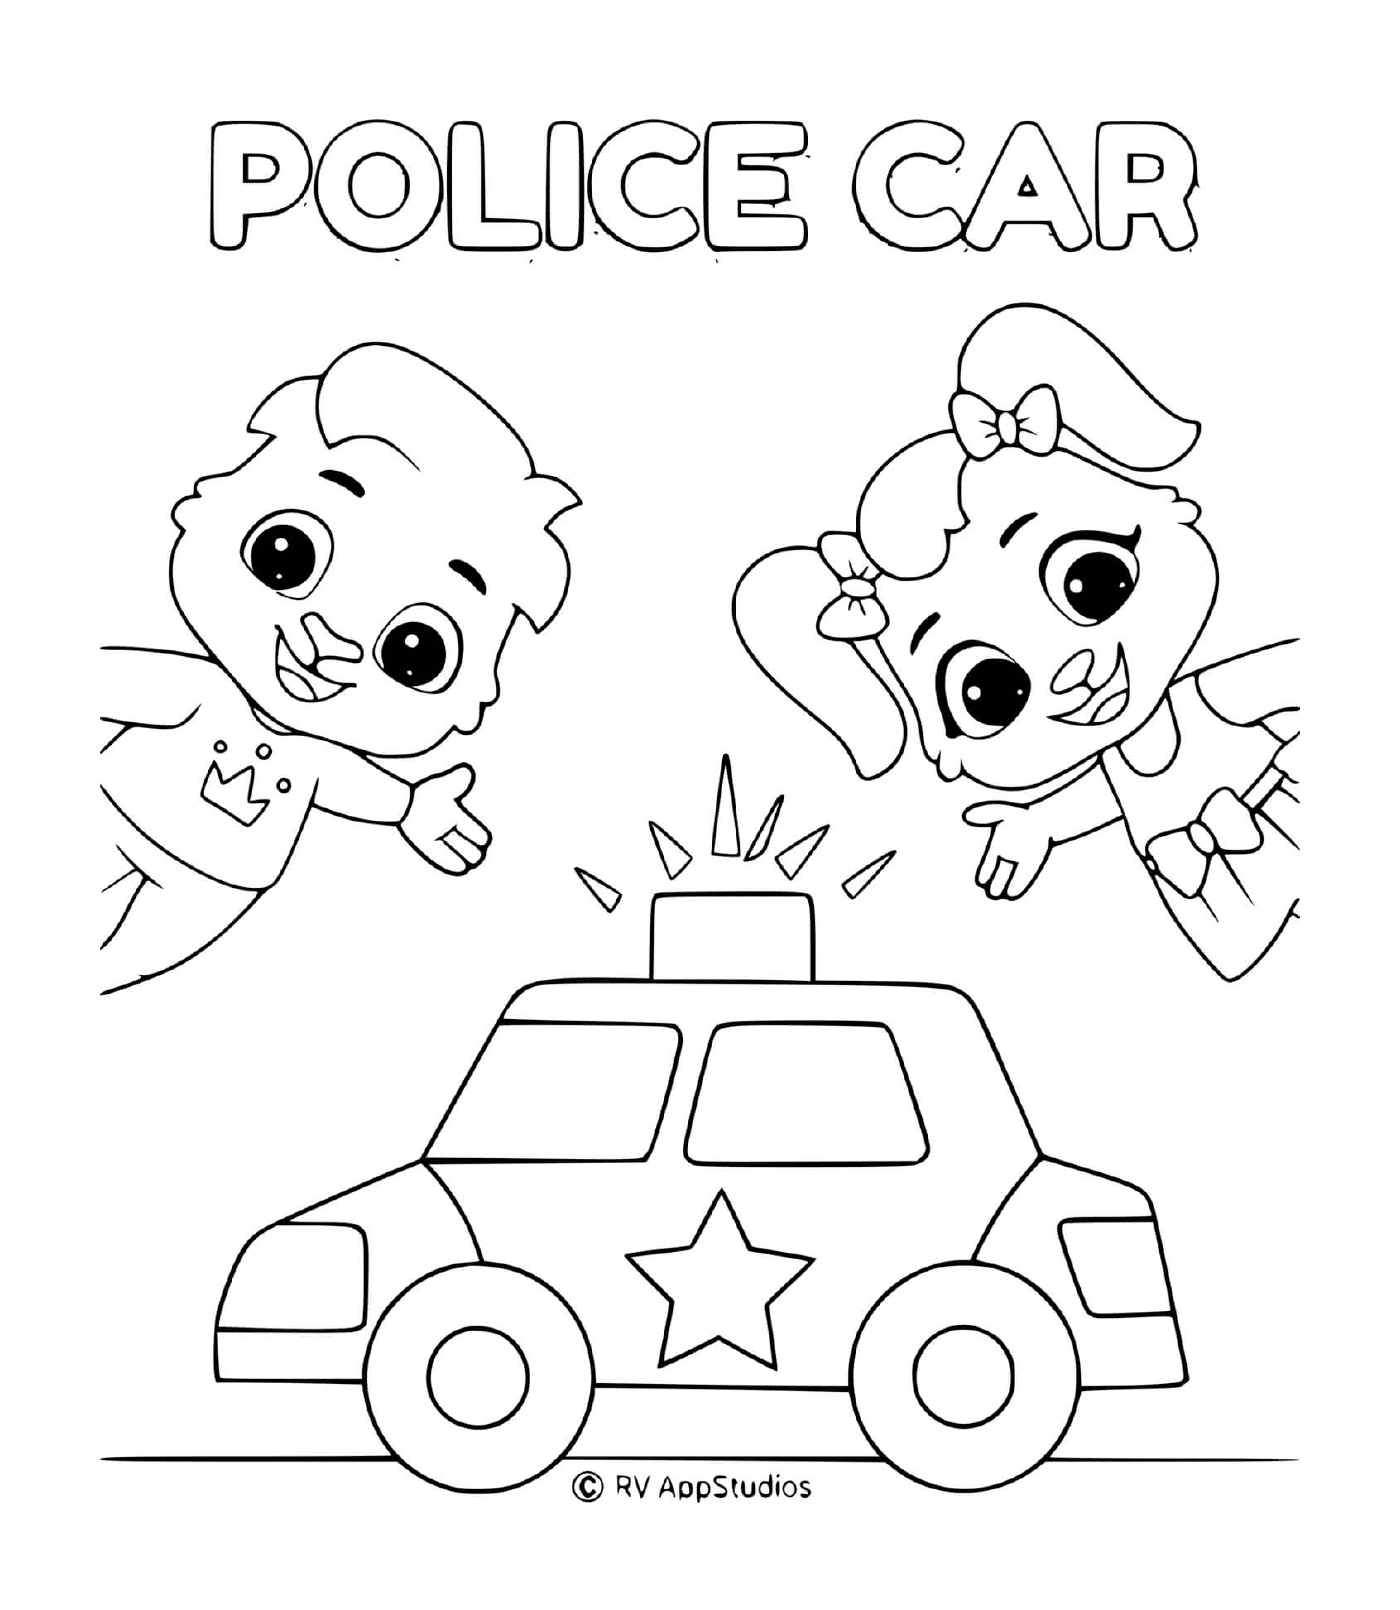  Car police, happy child 